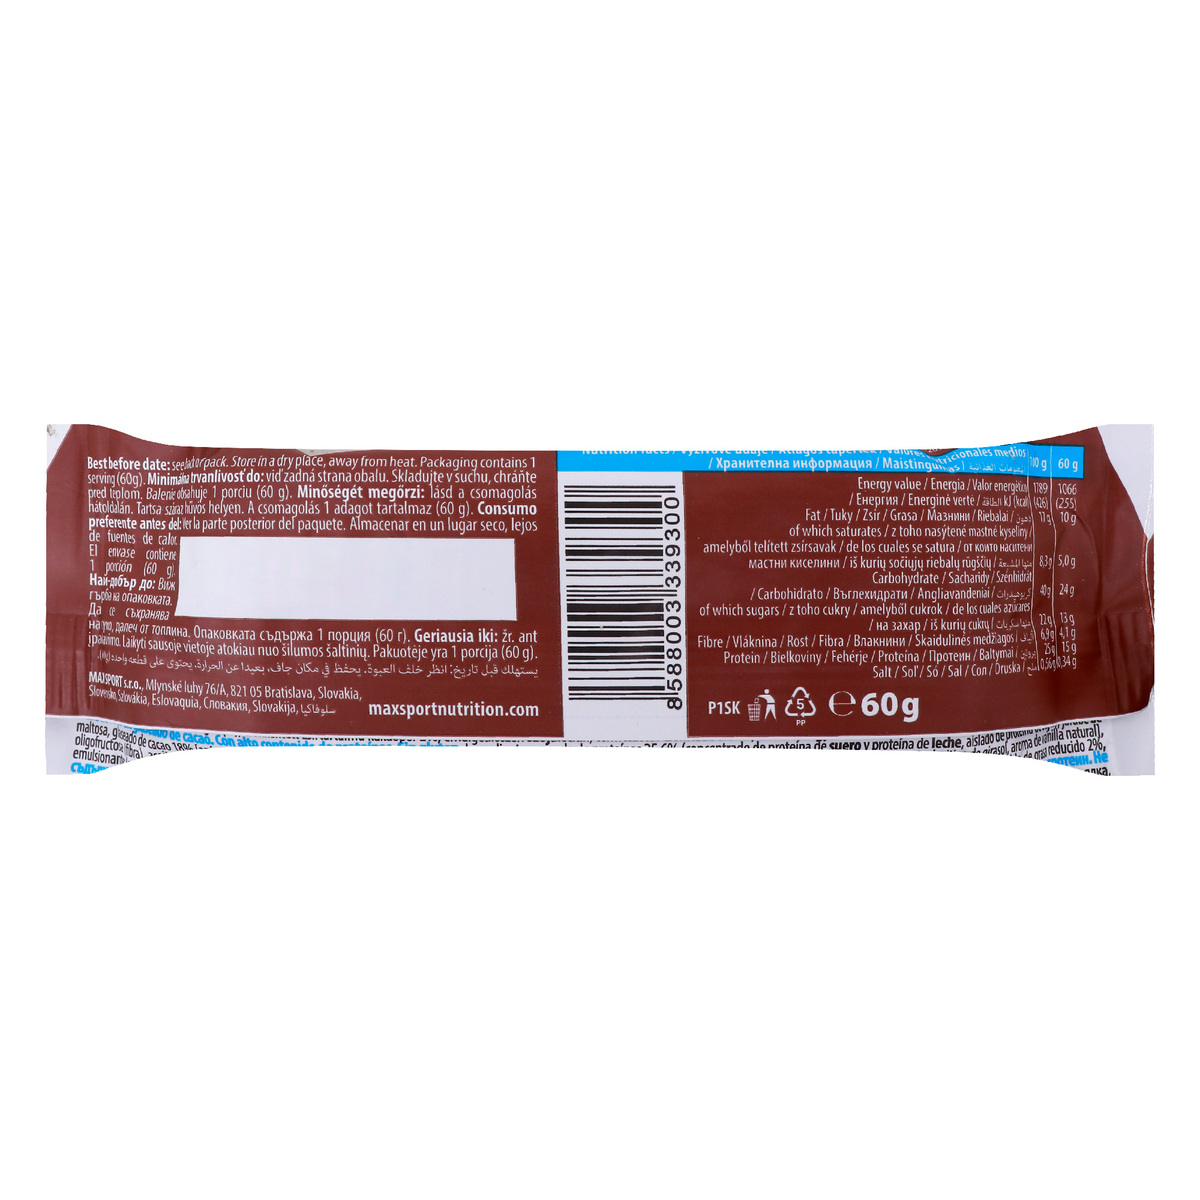 Max Sport Chocolate Flavour Protein Bar 60 g